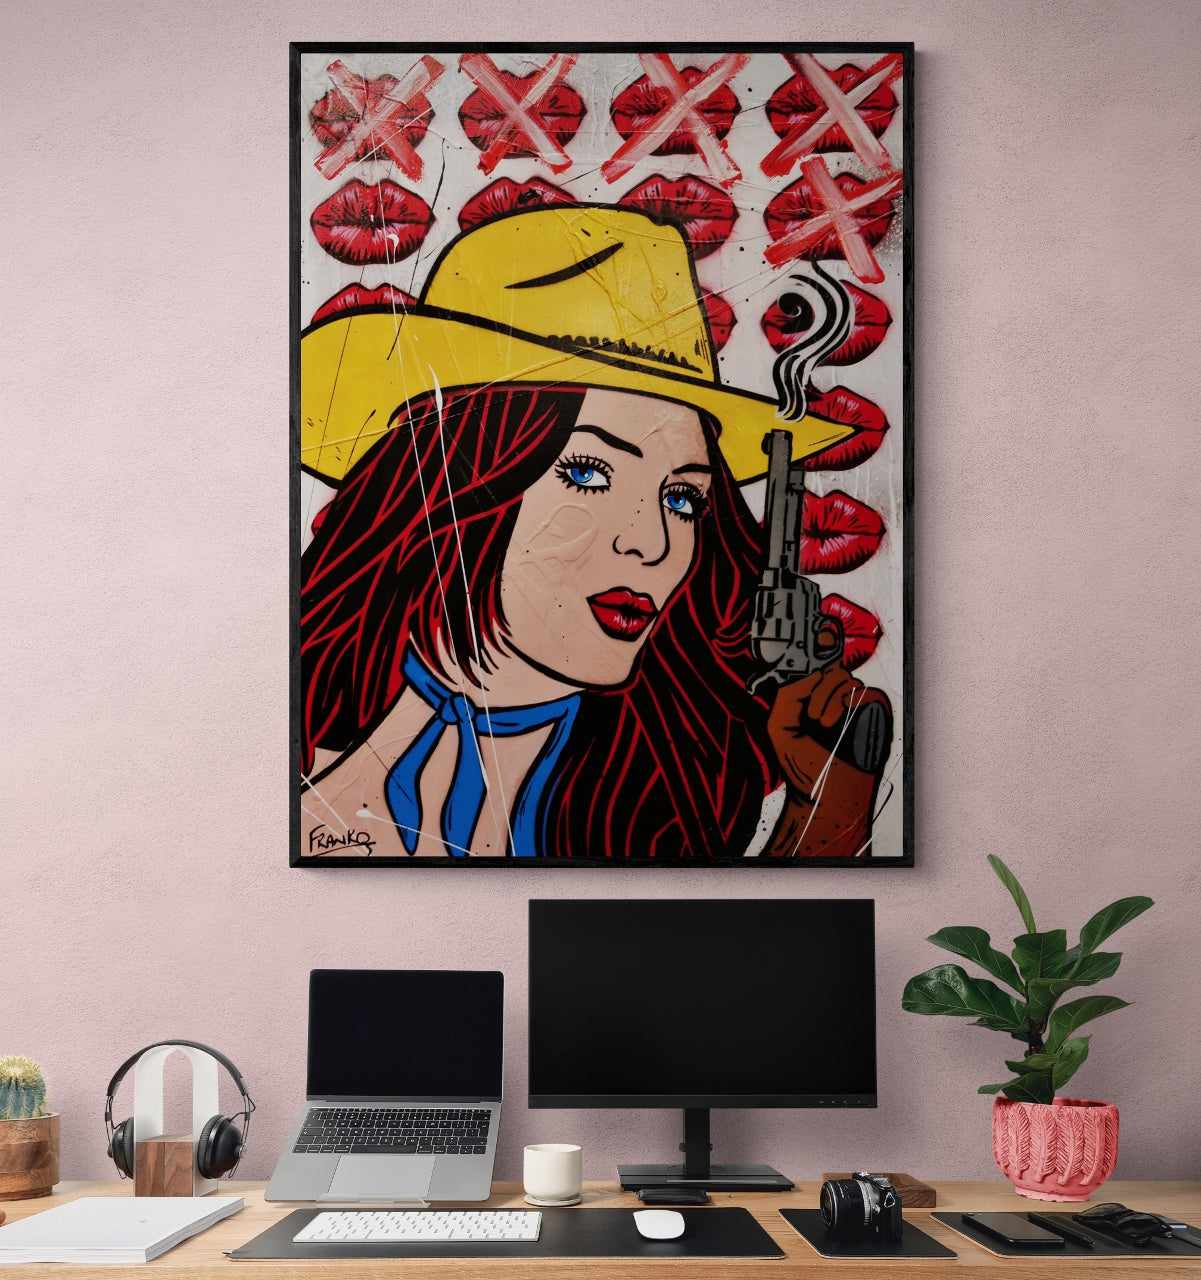 Pucker Up Cowboy 75cm x 100cm Cowgirl Textured Urban Pop Art Painting-Urban Pop Art-Franko-[franko_artist]-[Art]-[interior_design]-Franklin Art Studio